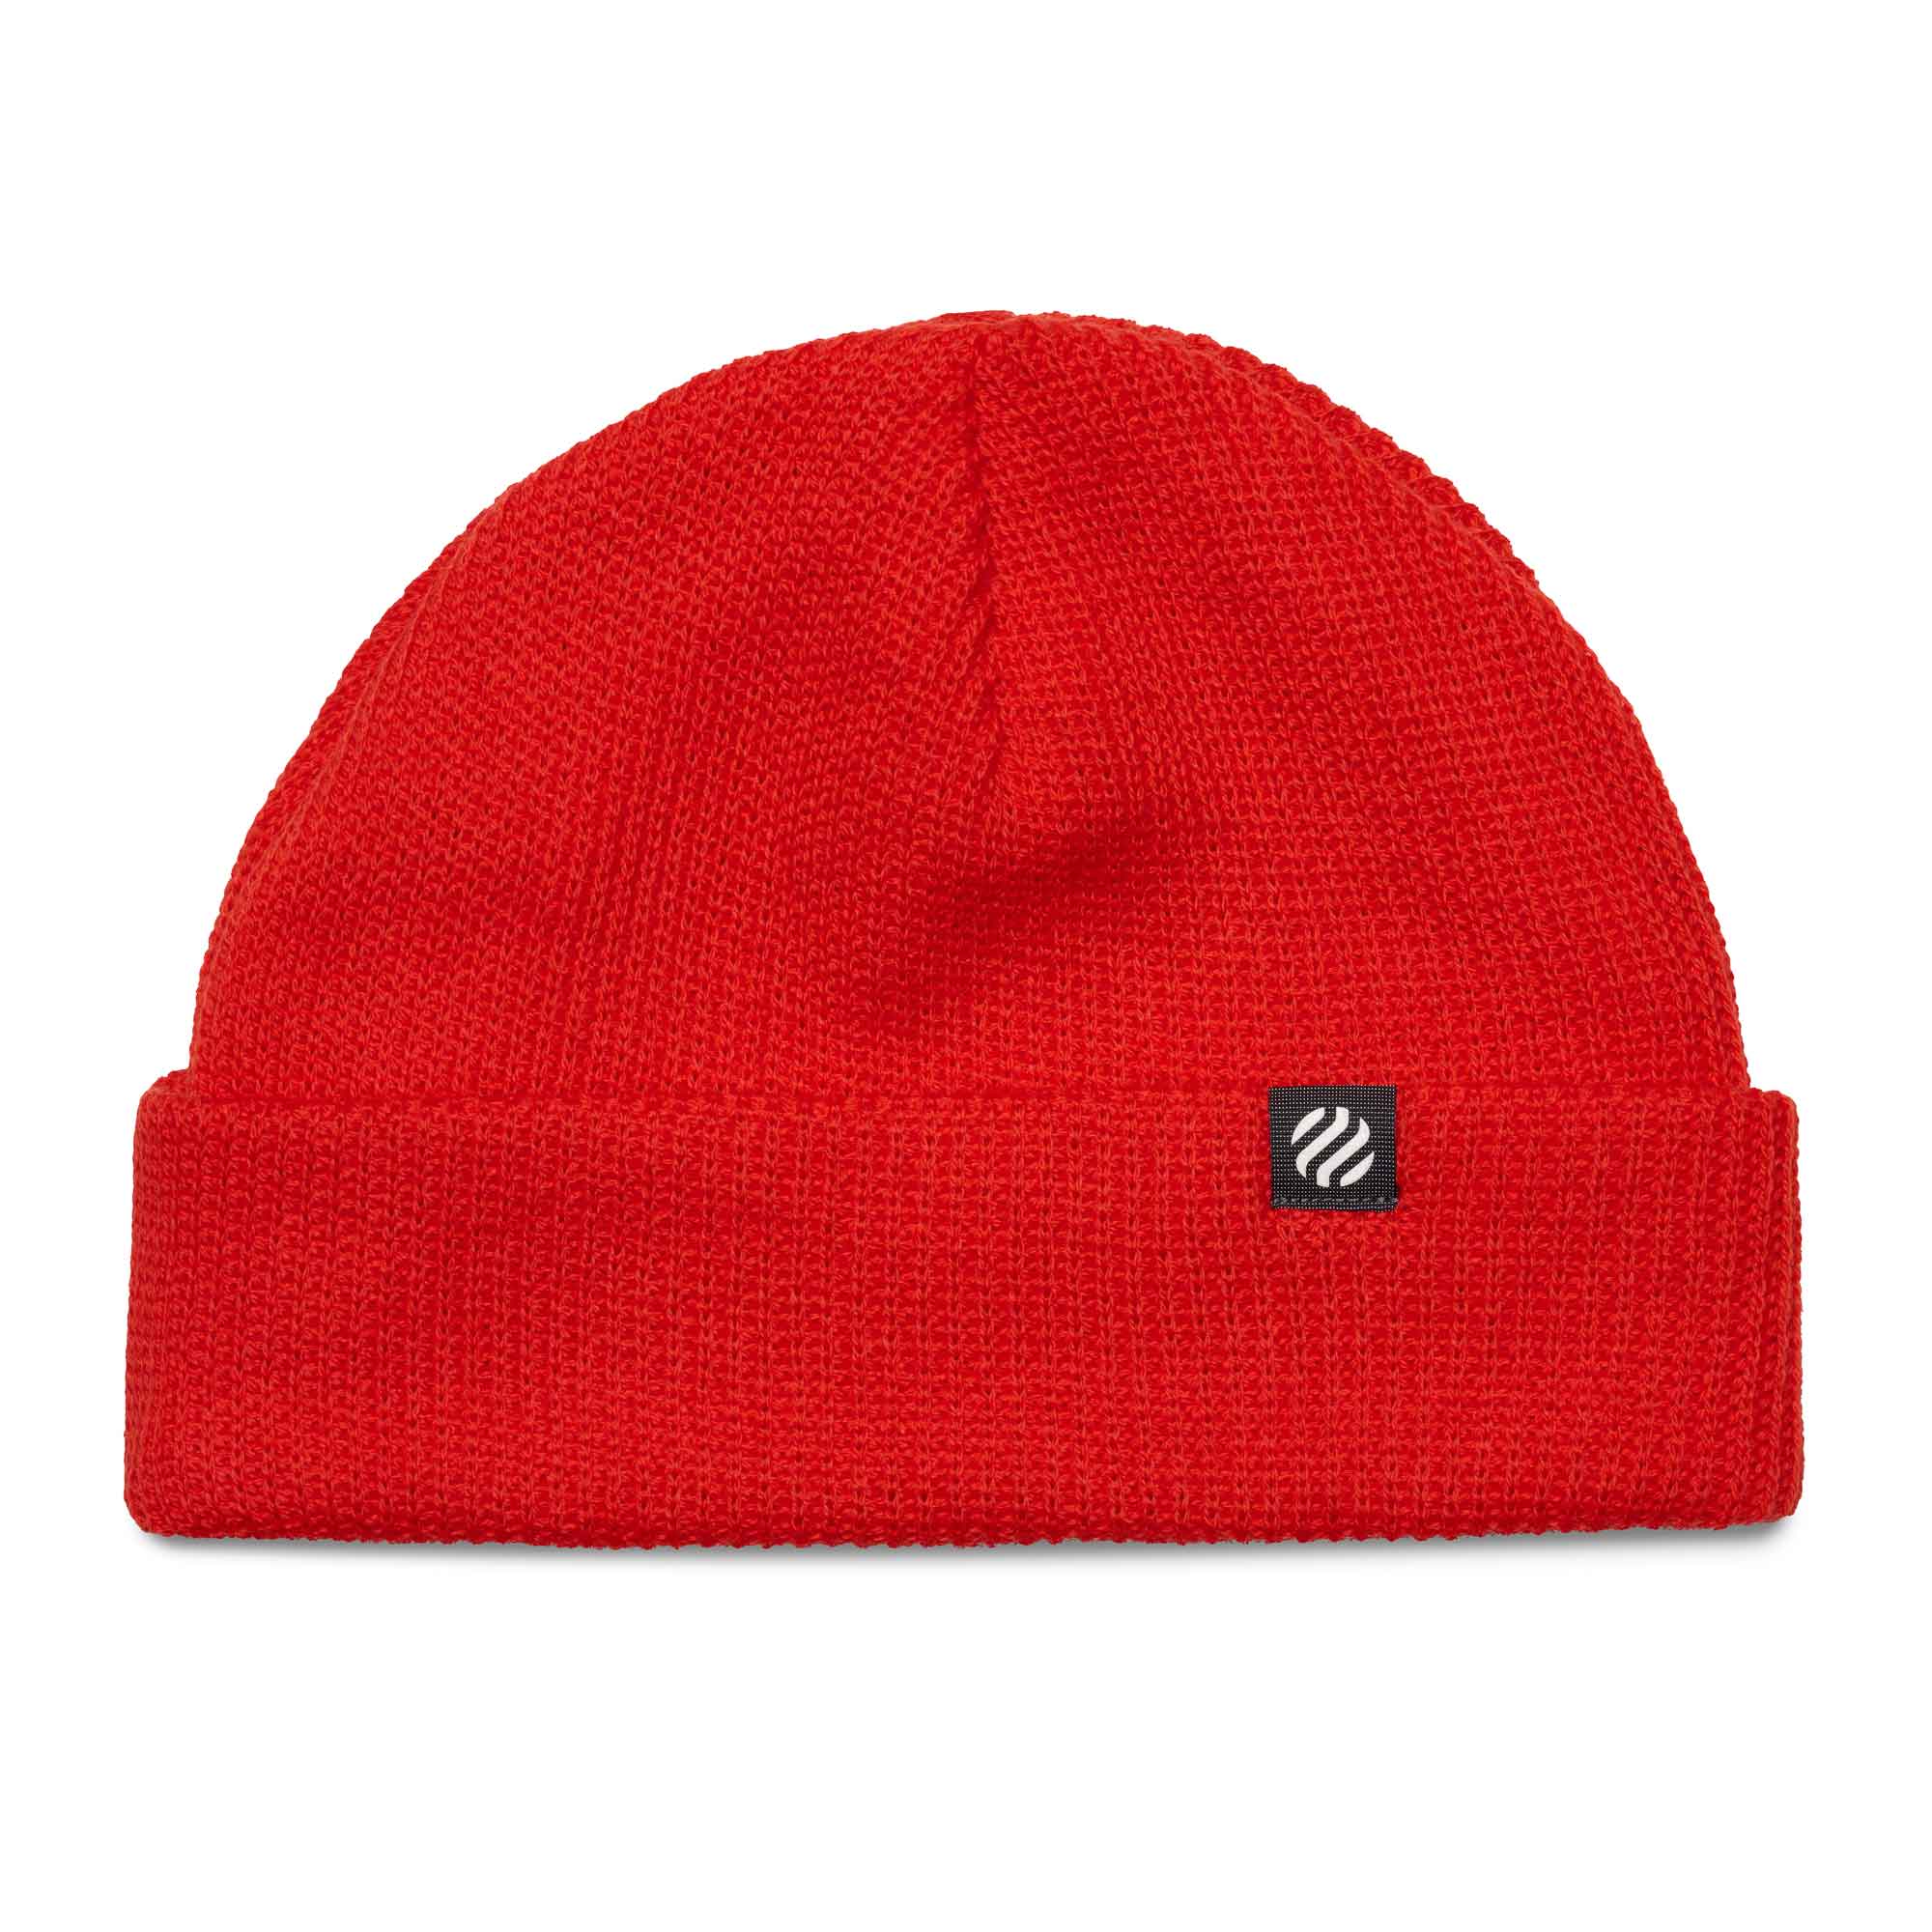 bonnet, short red